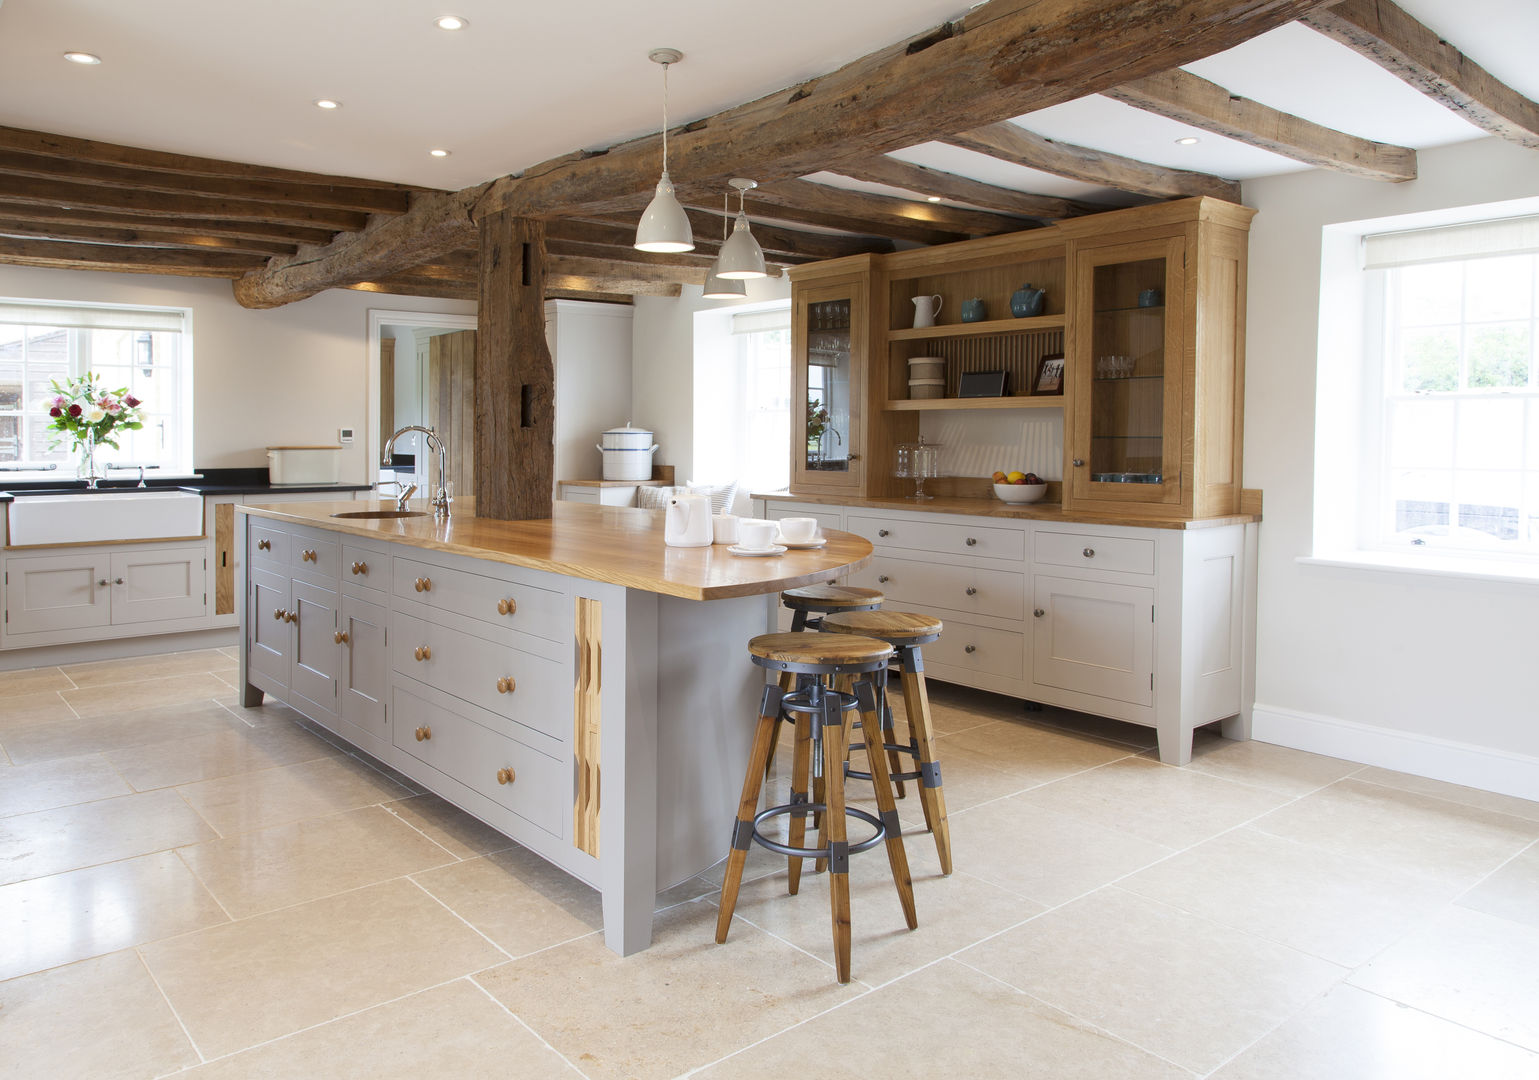 Old English - Bespoke kitchen project in Cambridgeshire Baker & Baker Cozinhas rústicas dresser,kitchen island,seating,tile flooring,beams,lighting